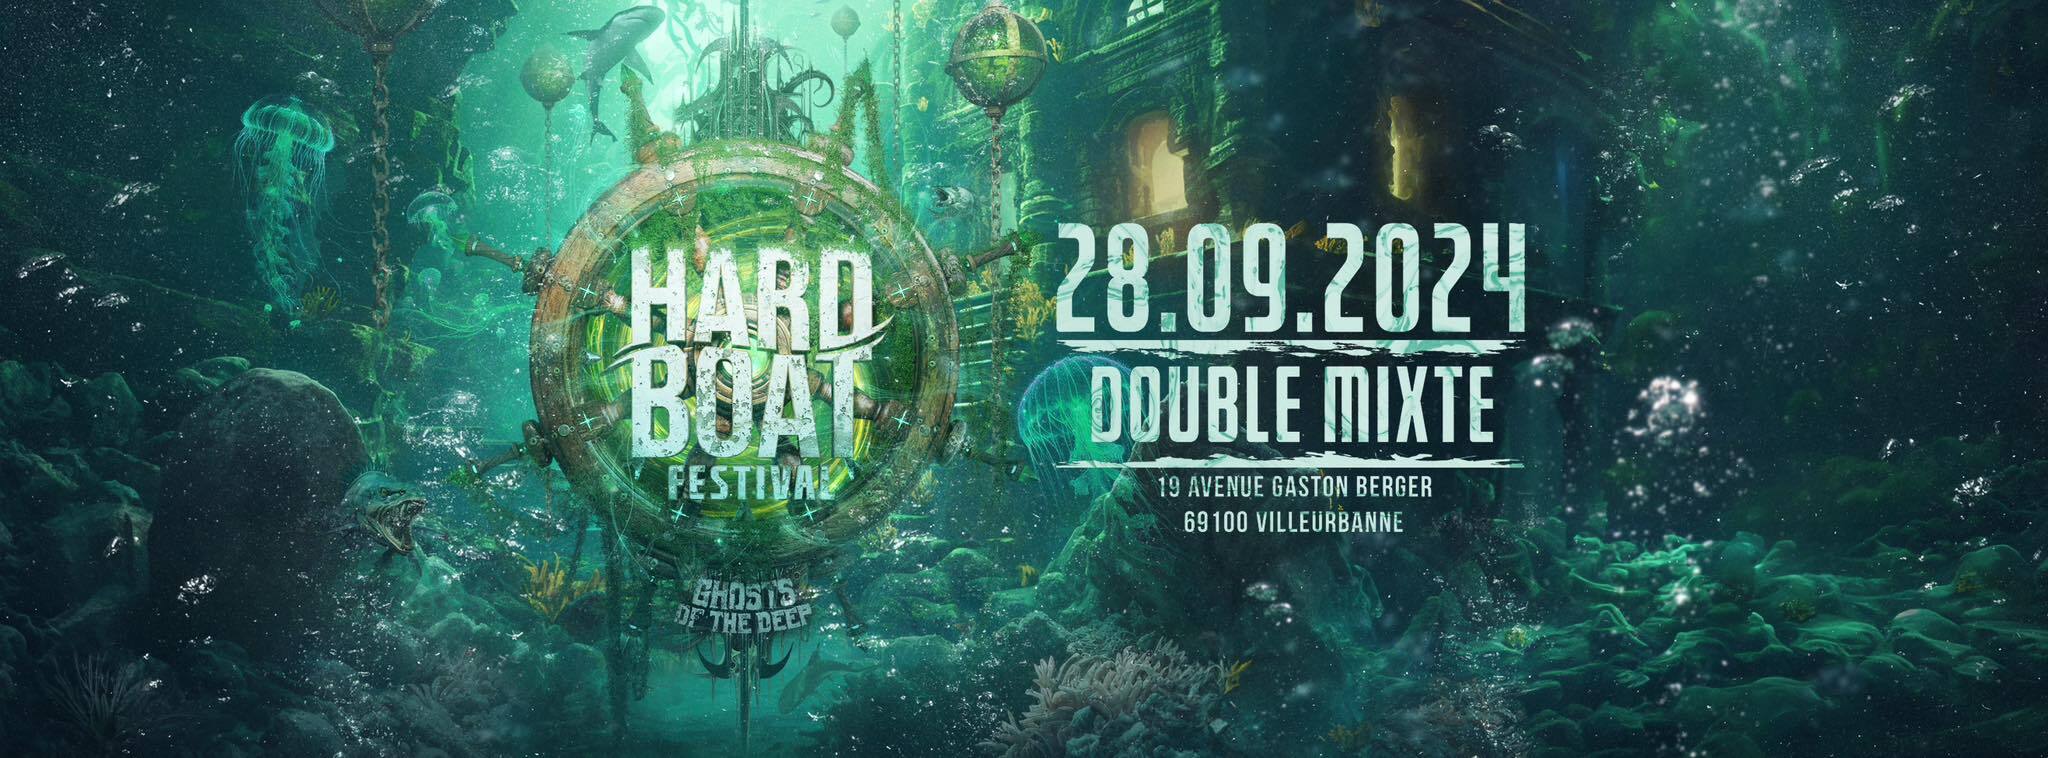 hard-boat-festival